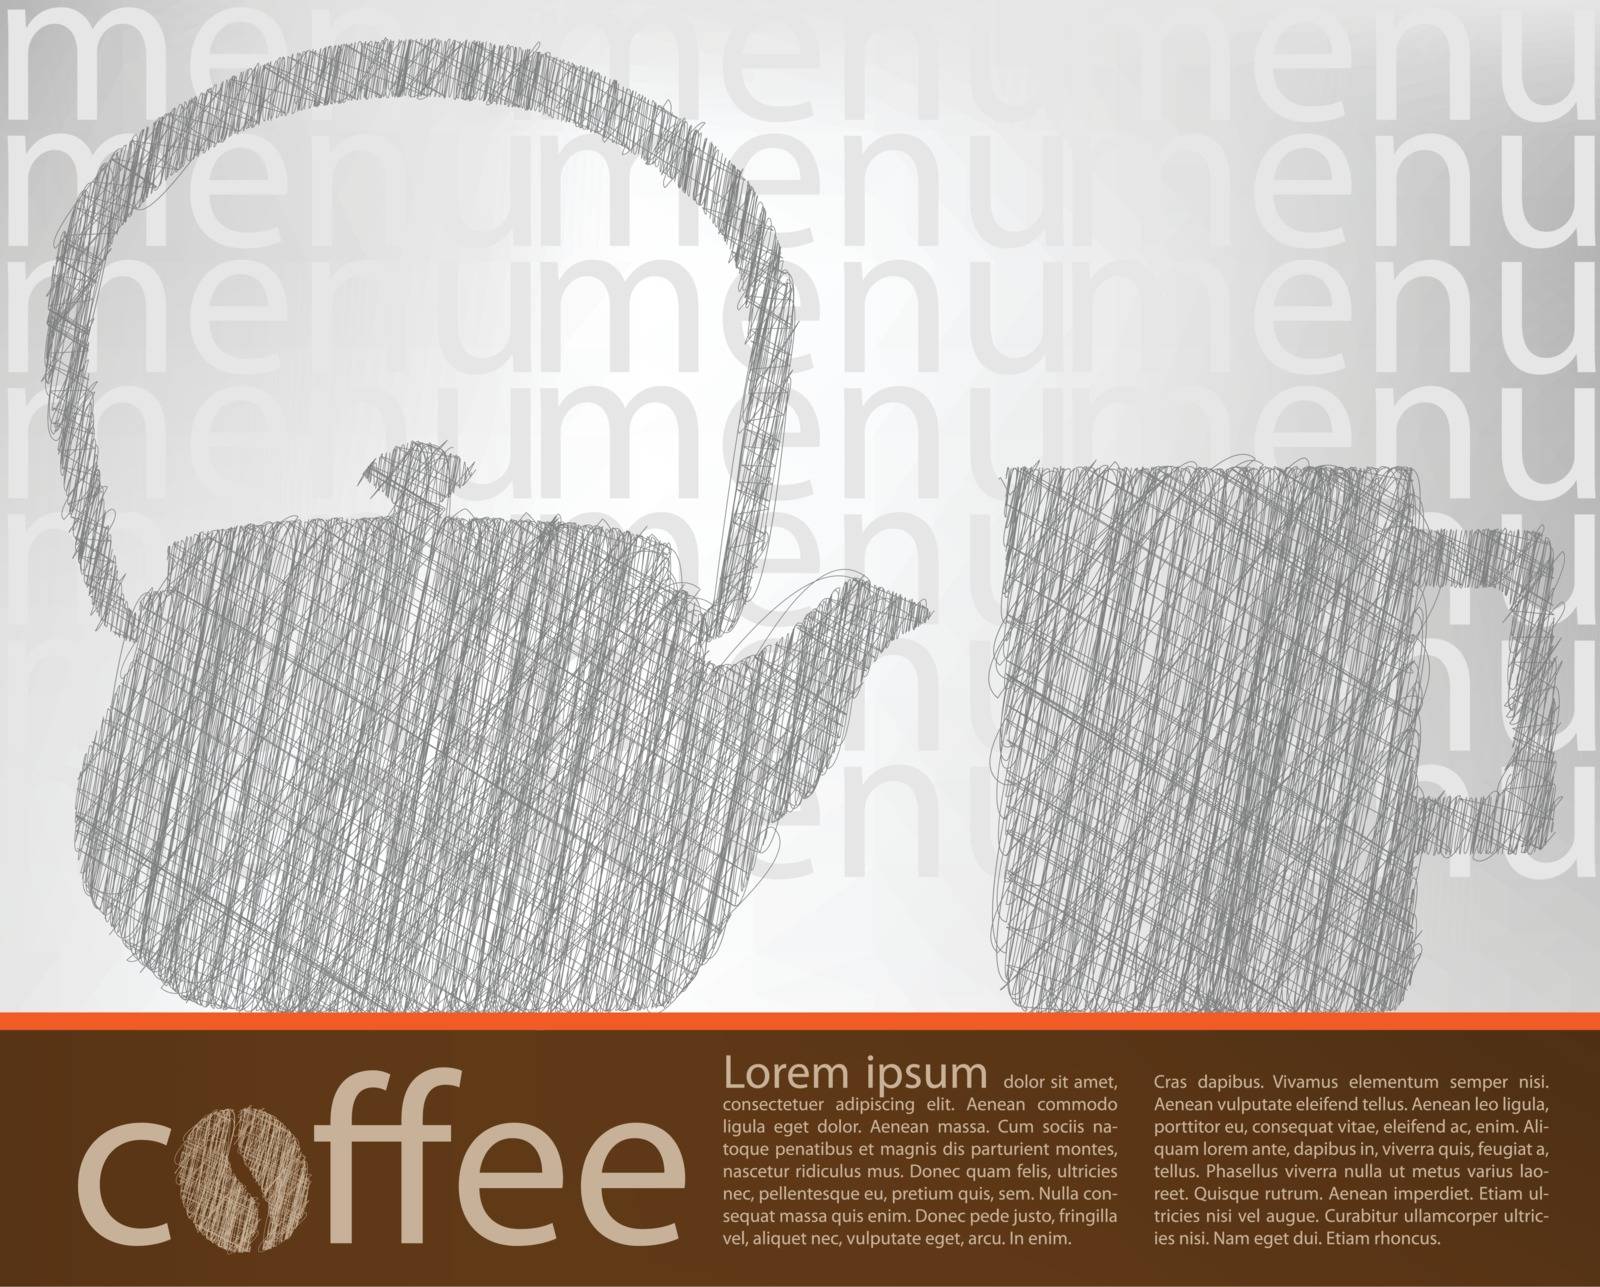 Coffee poster by aroas